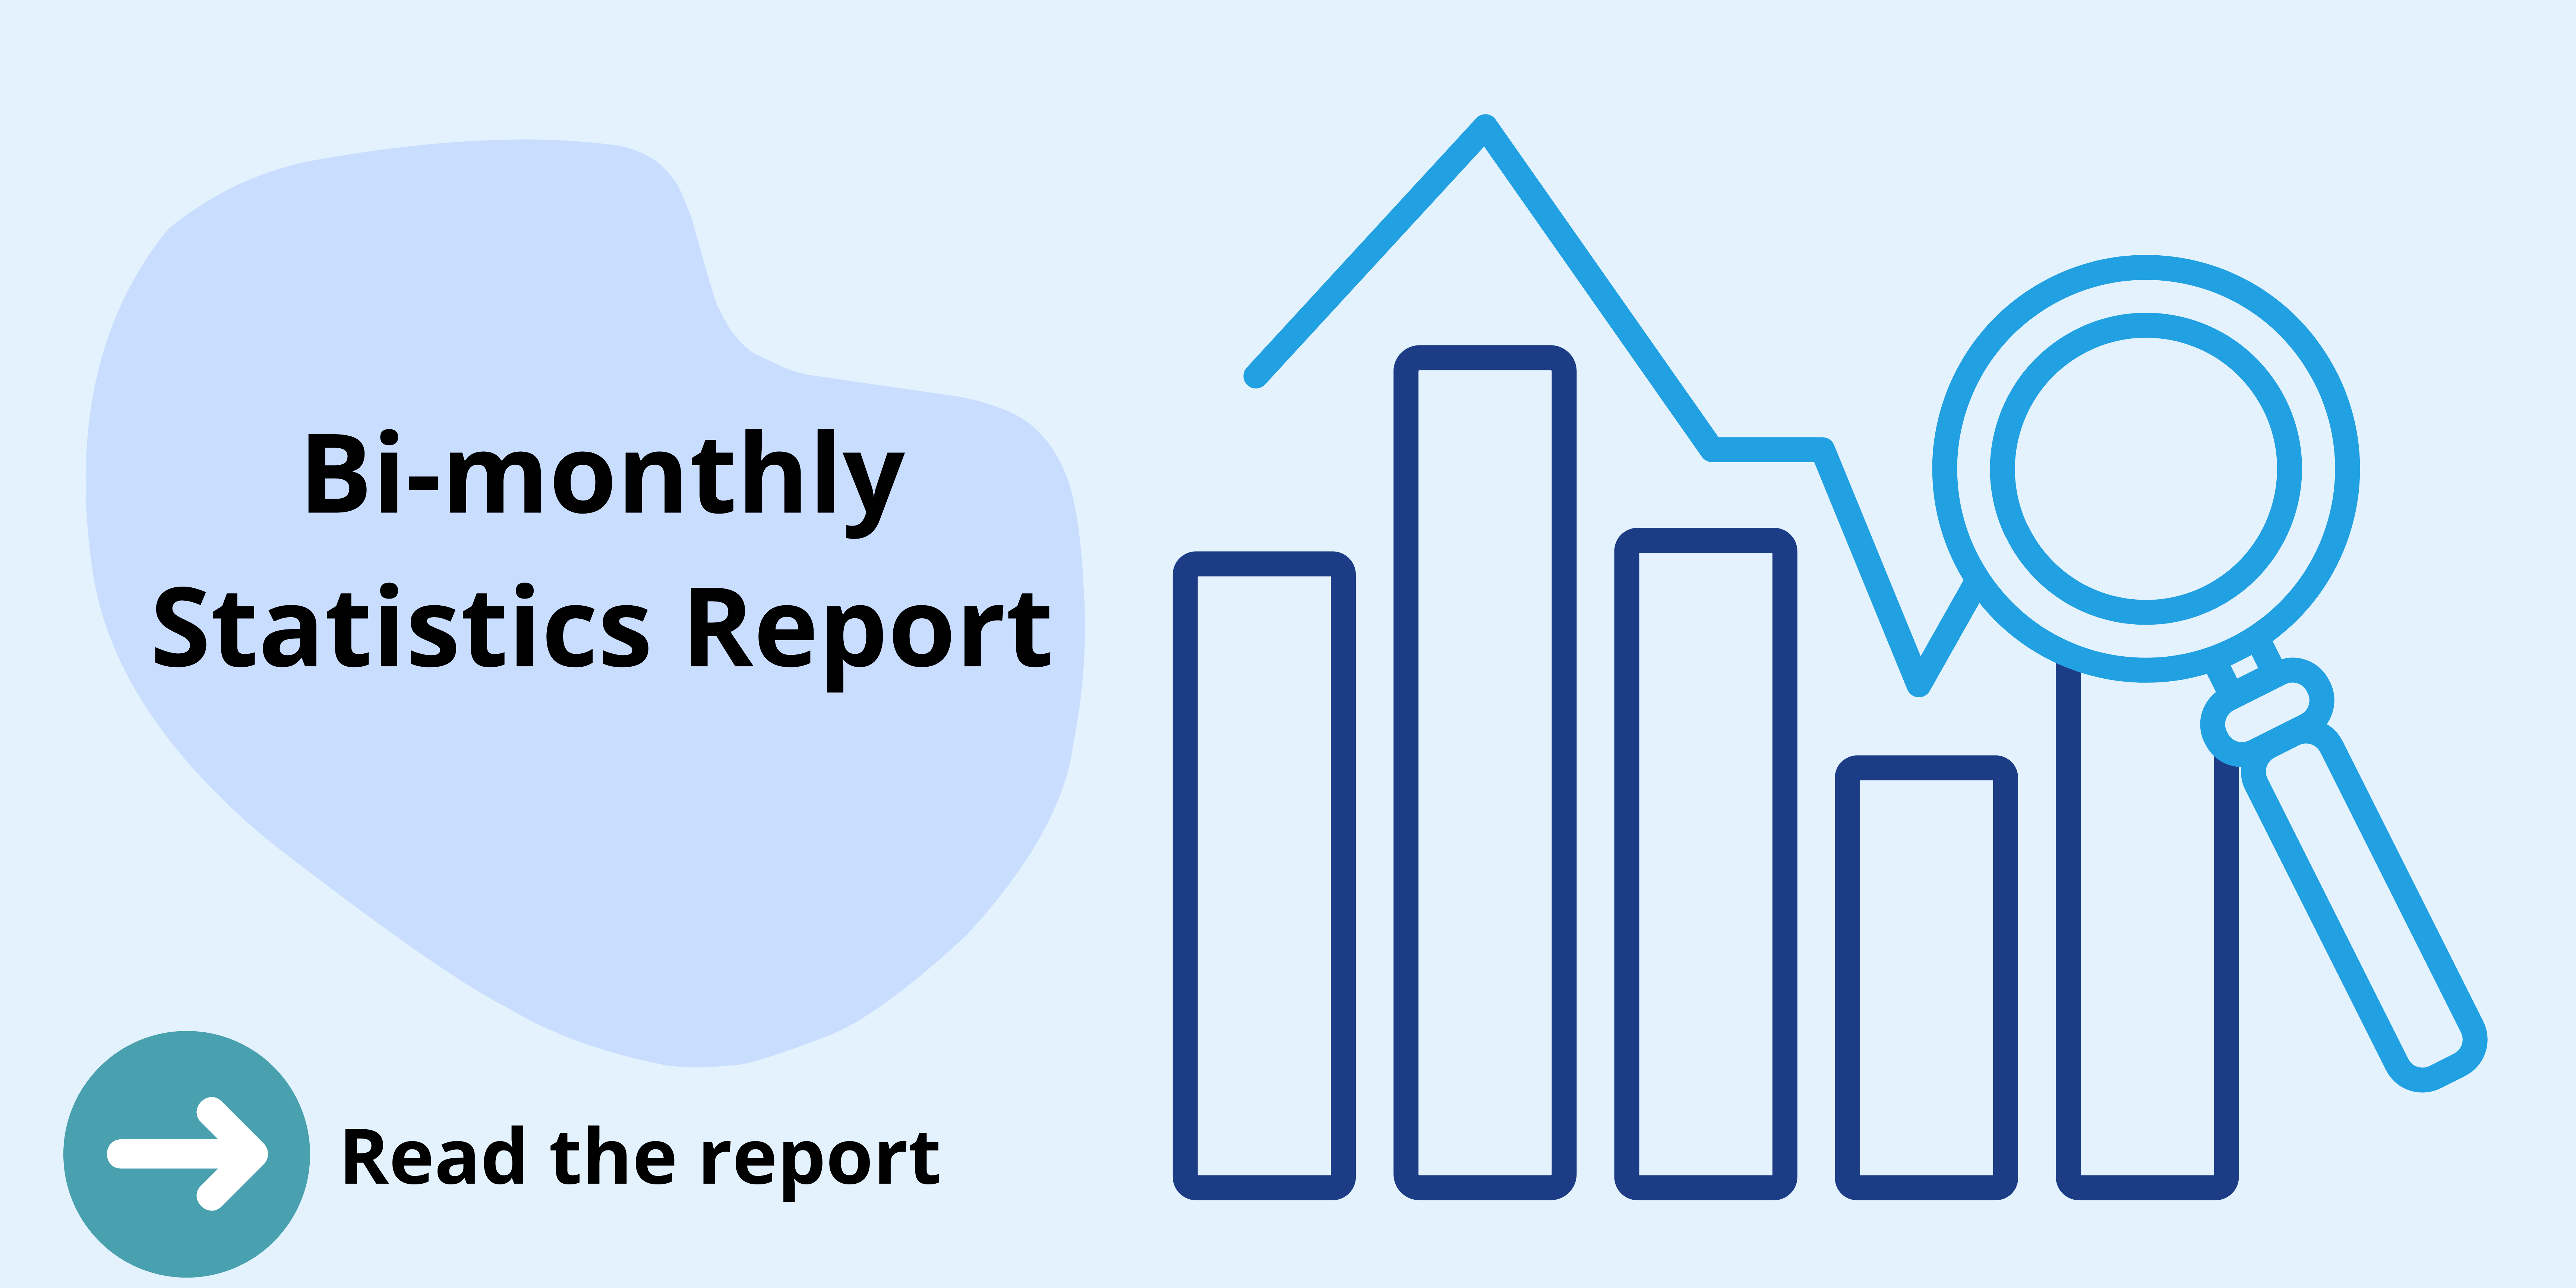 Bi-monthly Statistics Report (1)